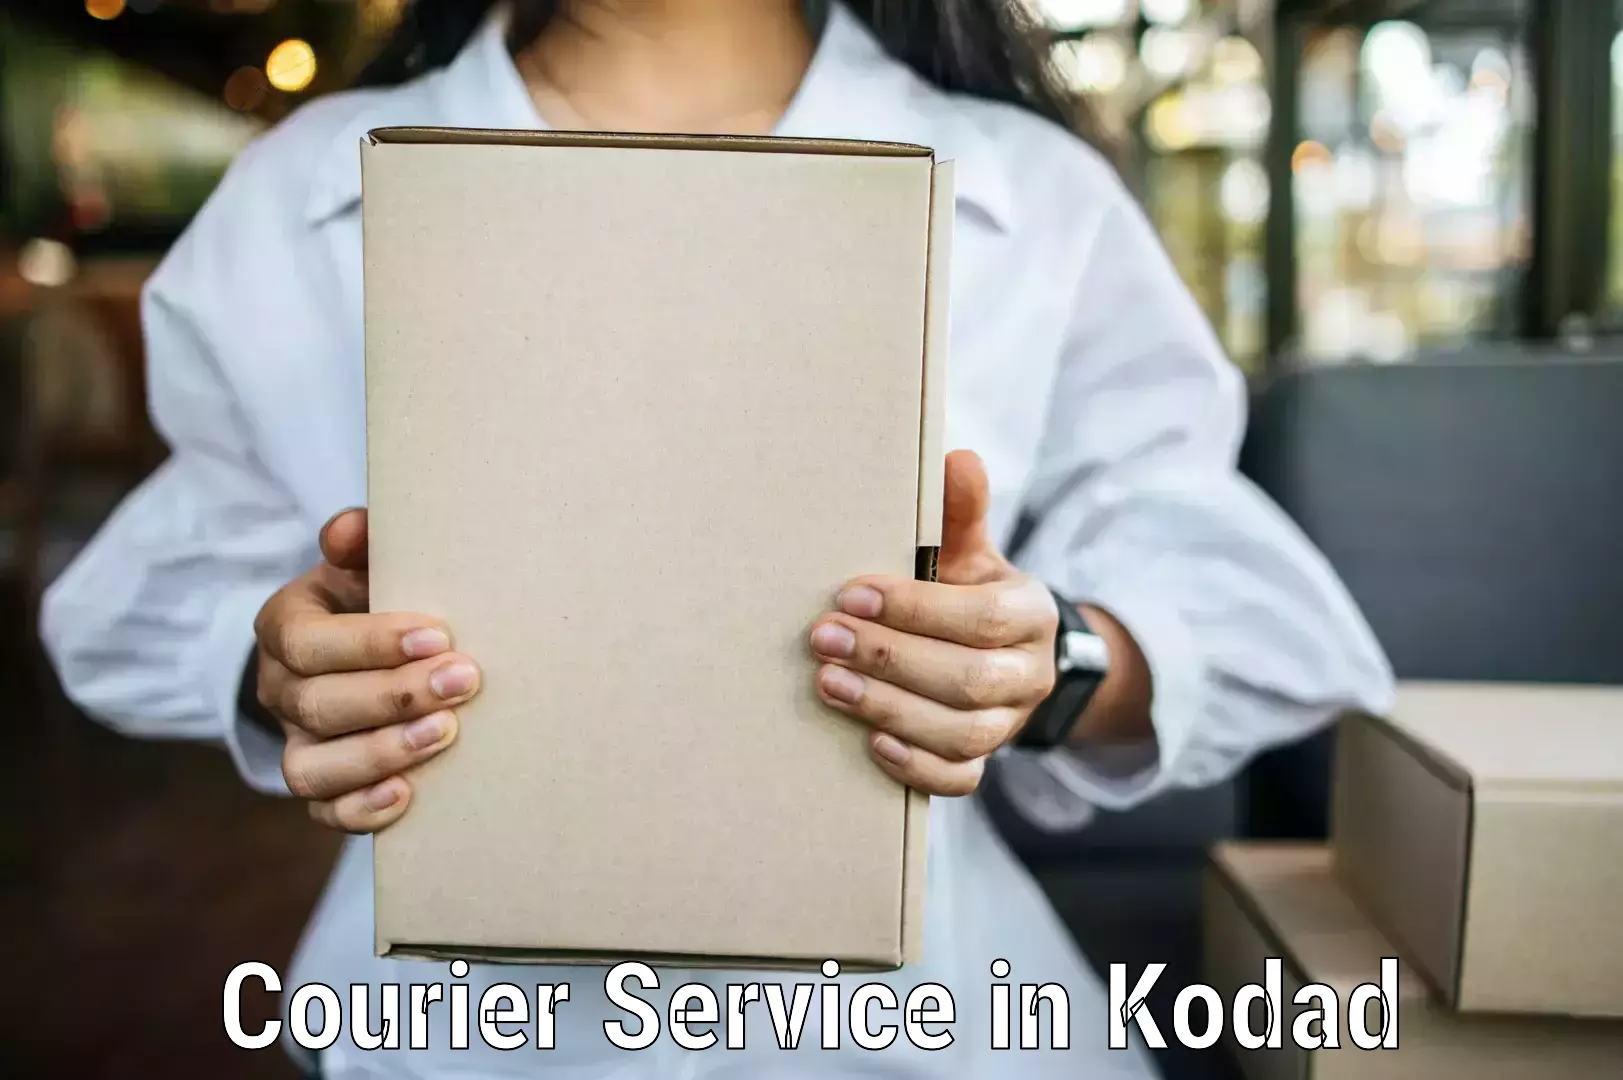 High-priority parcel service in Kodad